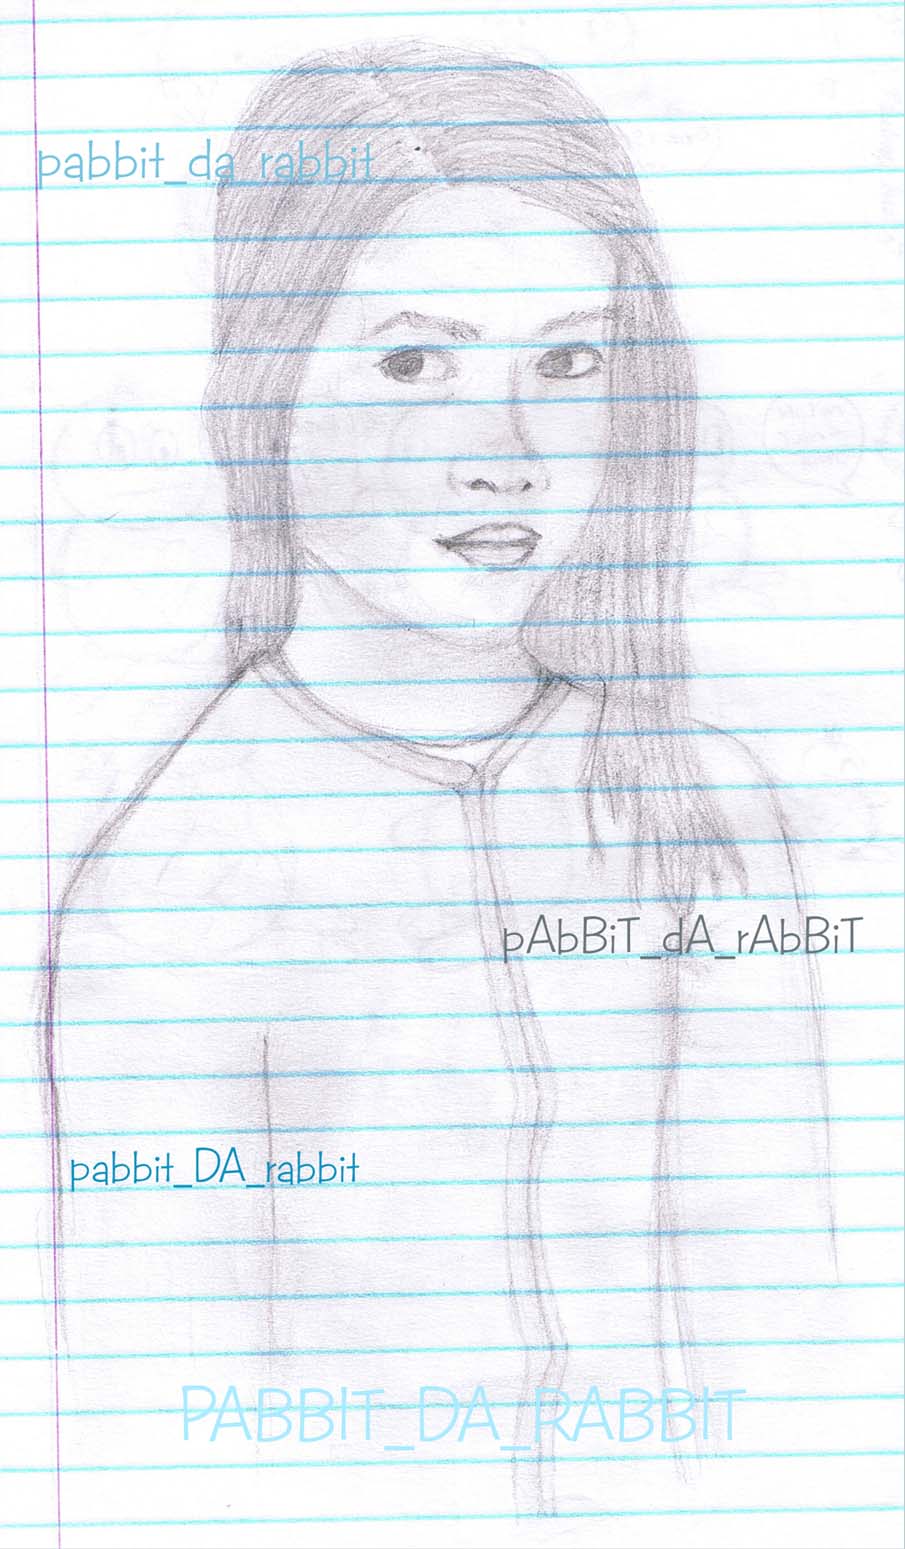 Self-portrait by Pabbit_da_Rabbit